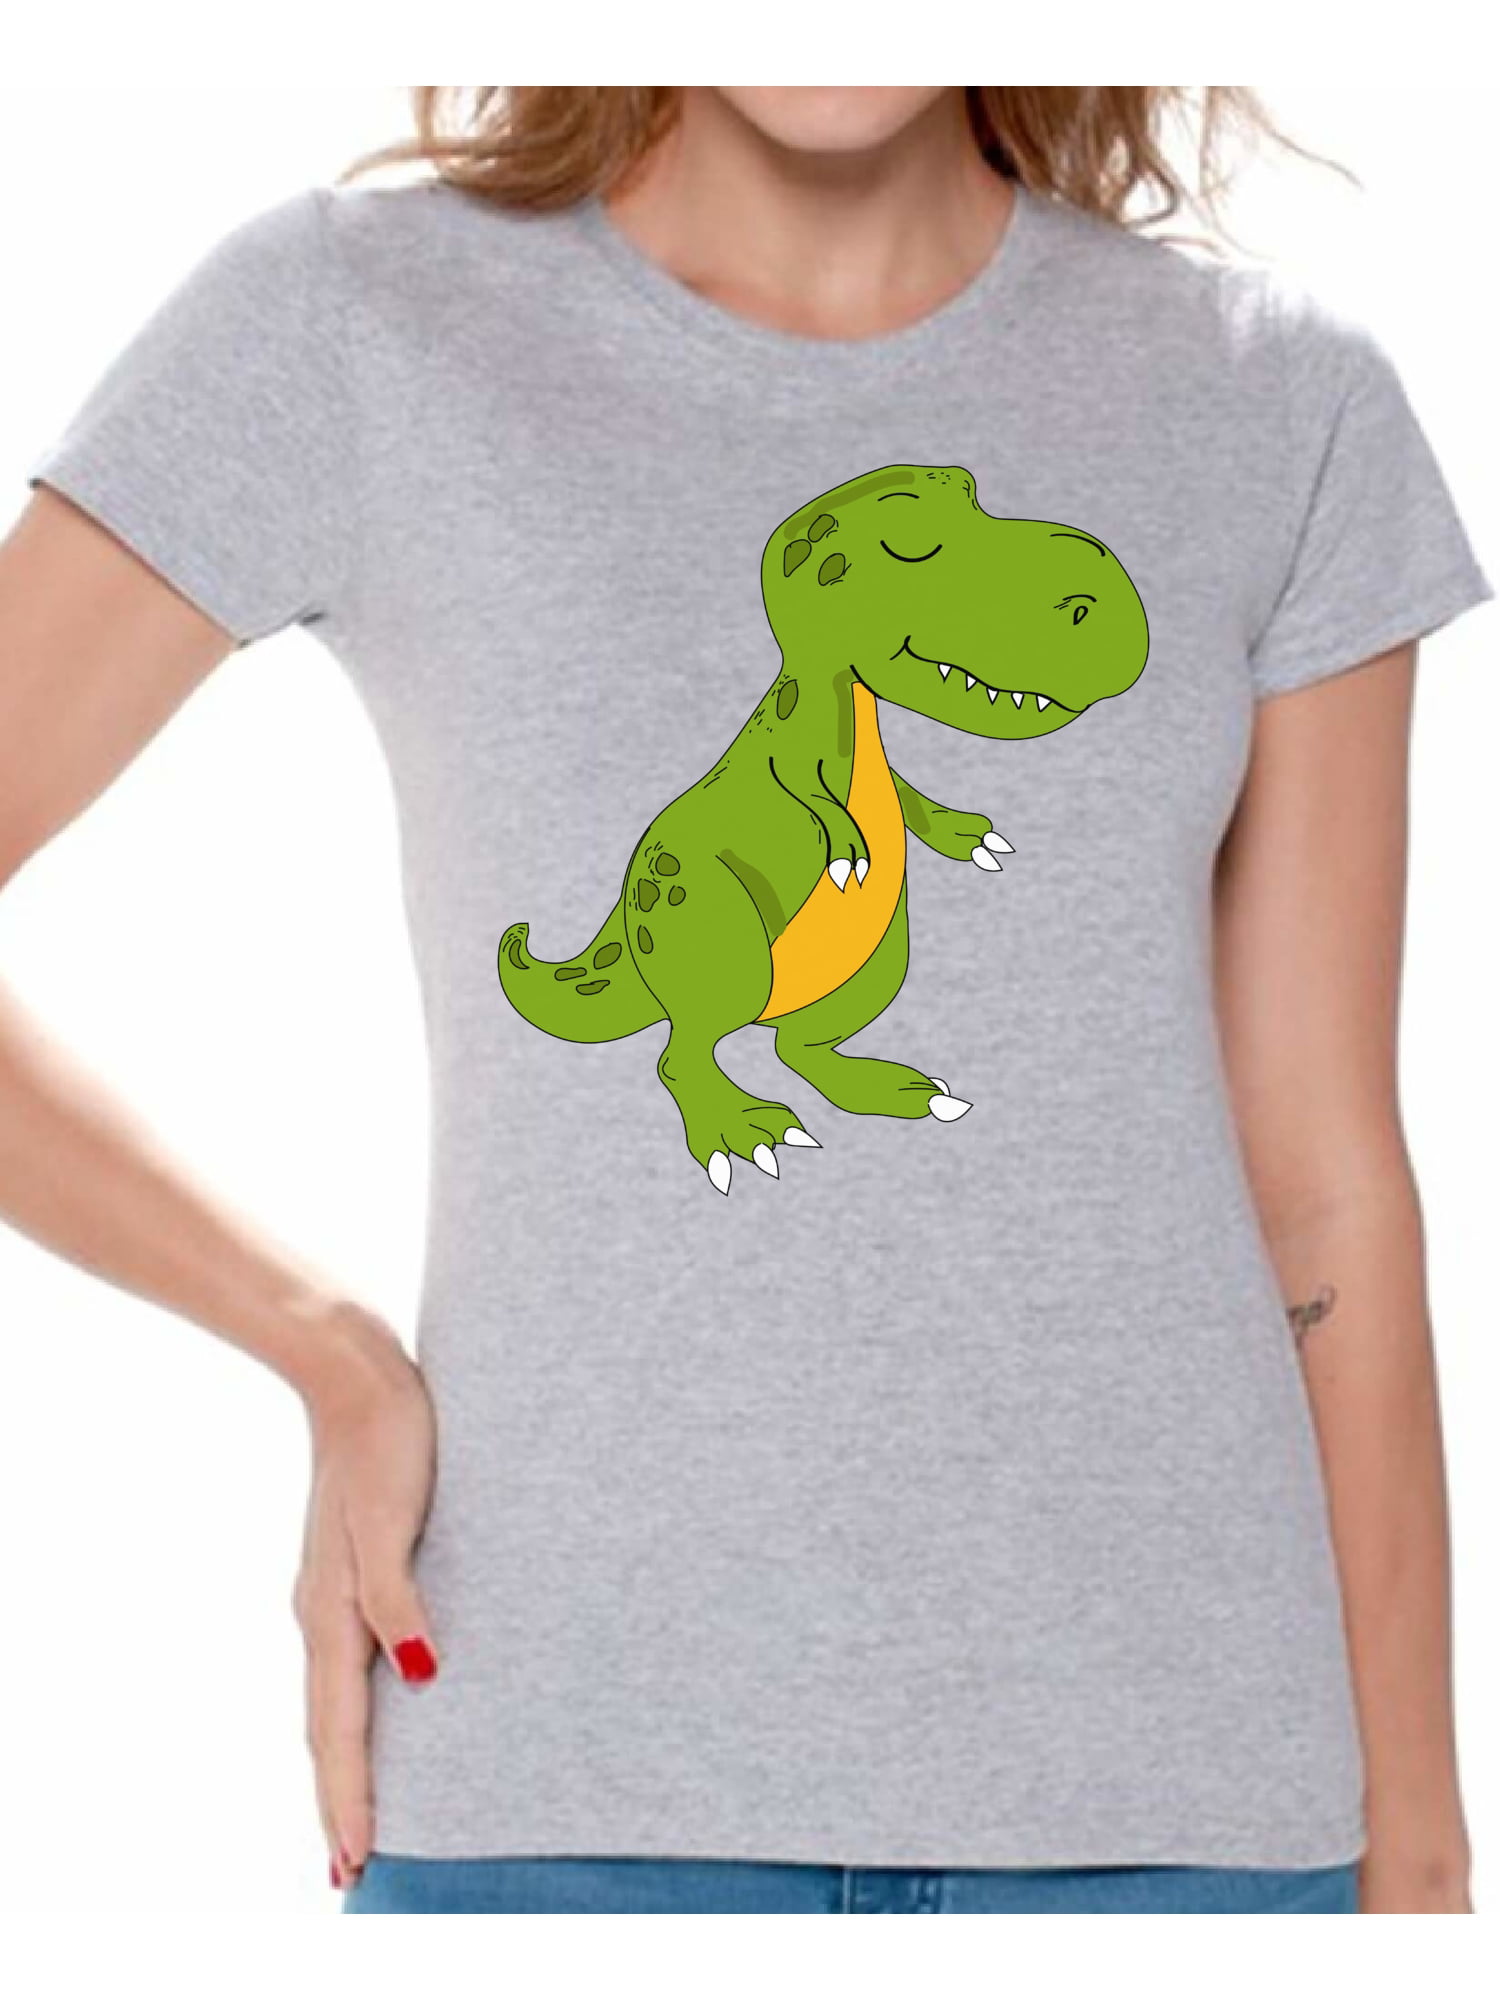 Tyrannosaurus Rex Dinosaur Tshirt for Women Dinosaur Gifts for Her.